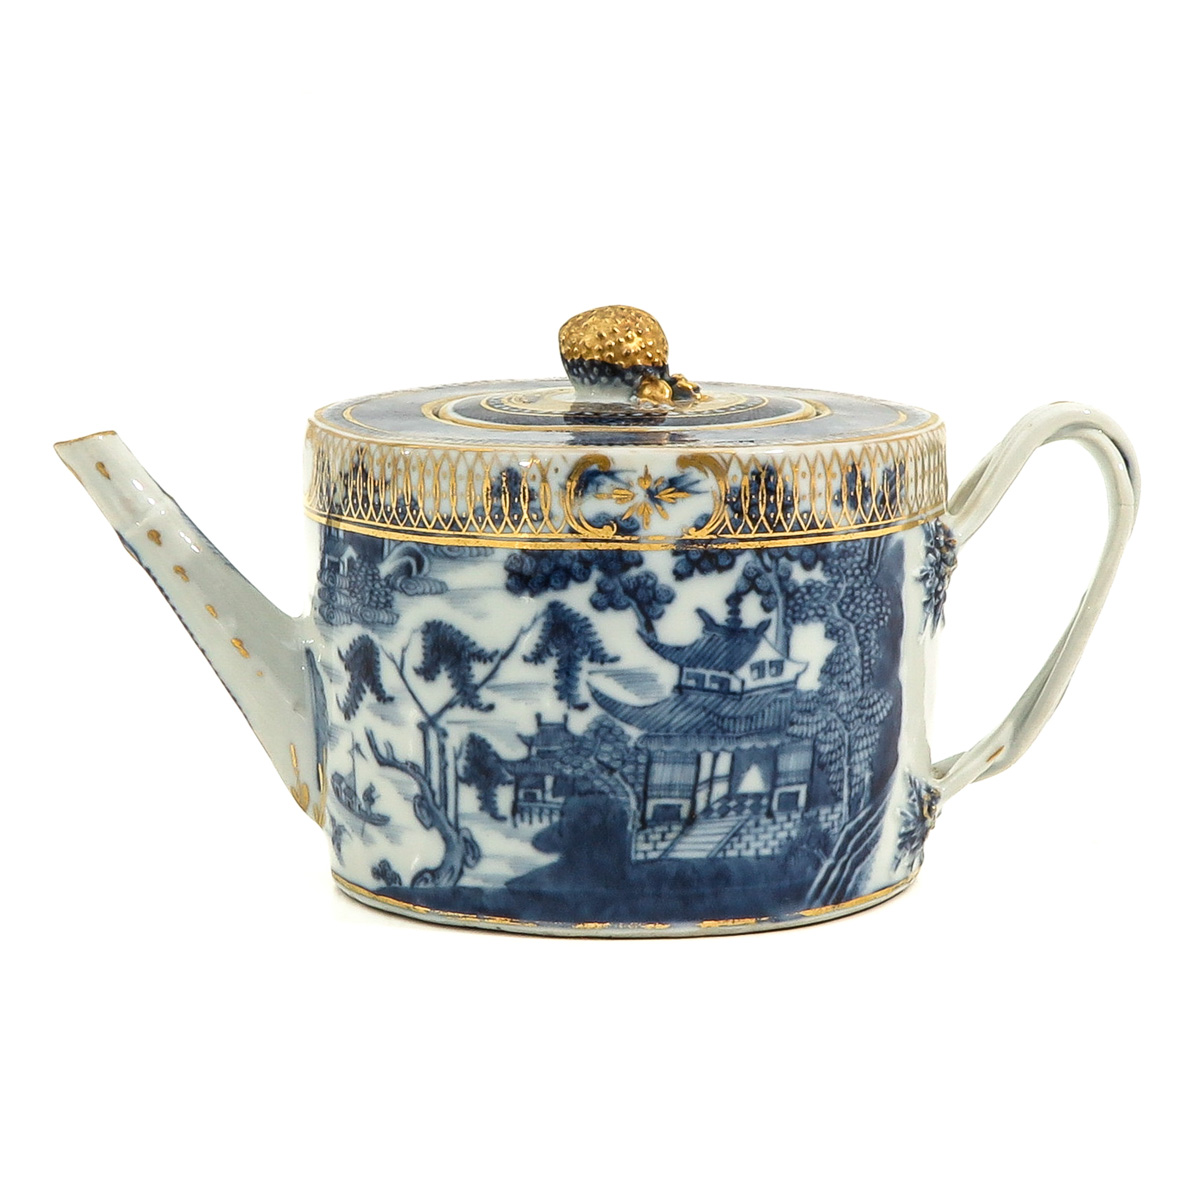 A Blue and Gilt Decor Teapot